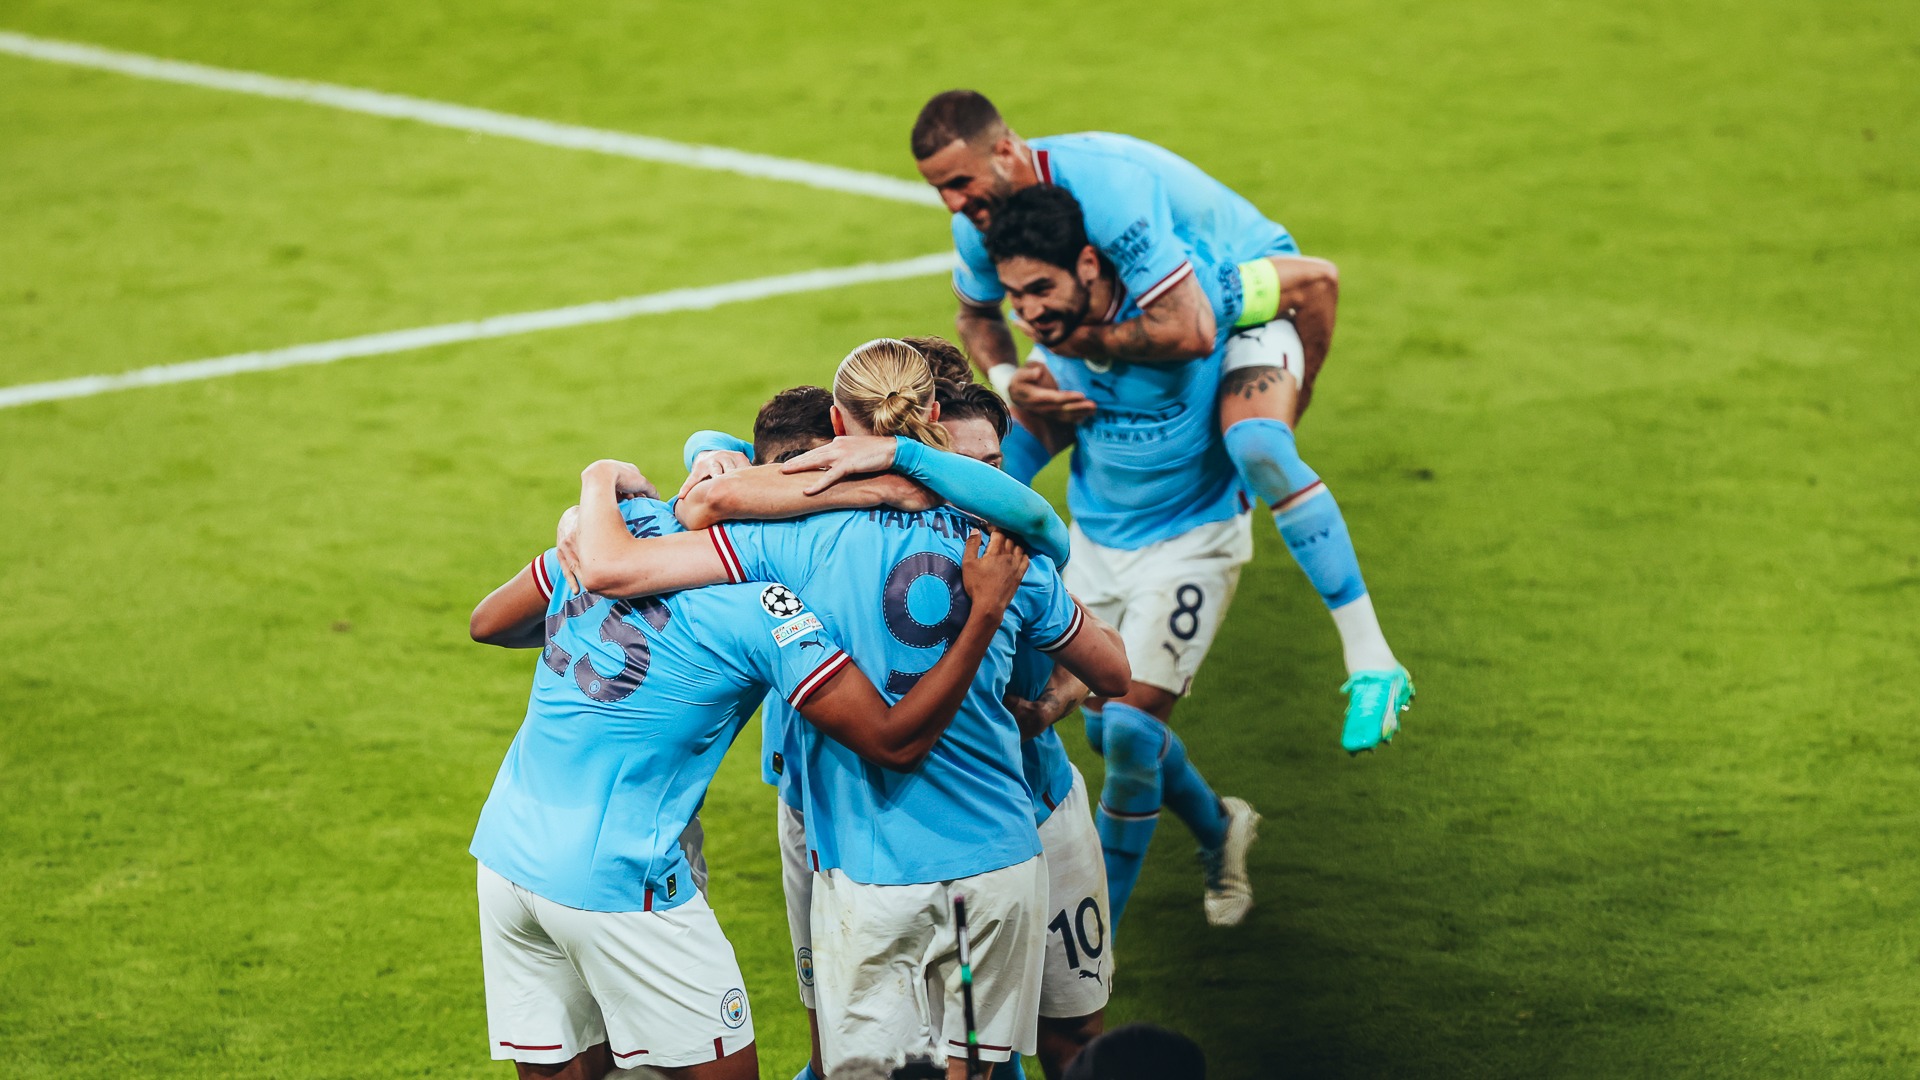 NIGHT TO REMEMBER: The City players celebrate Bernardo's second